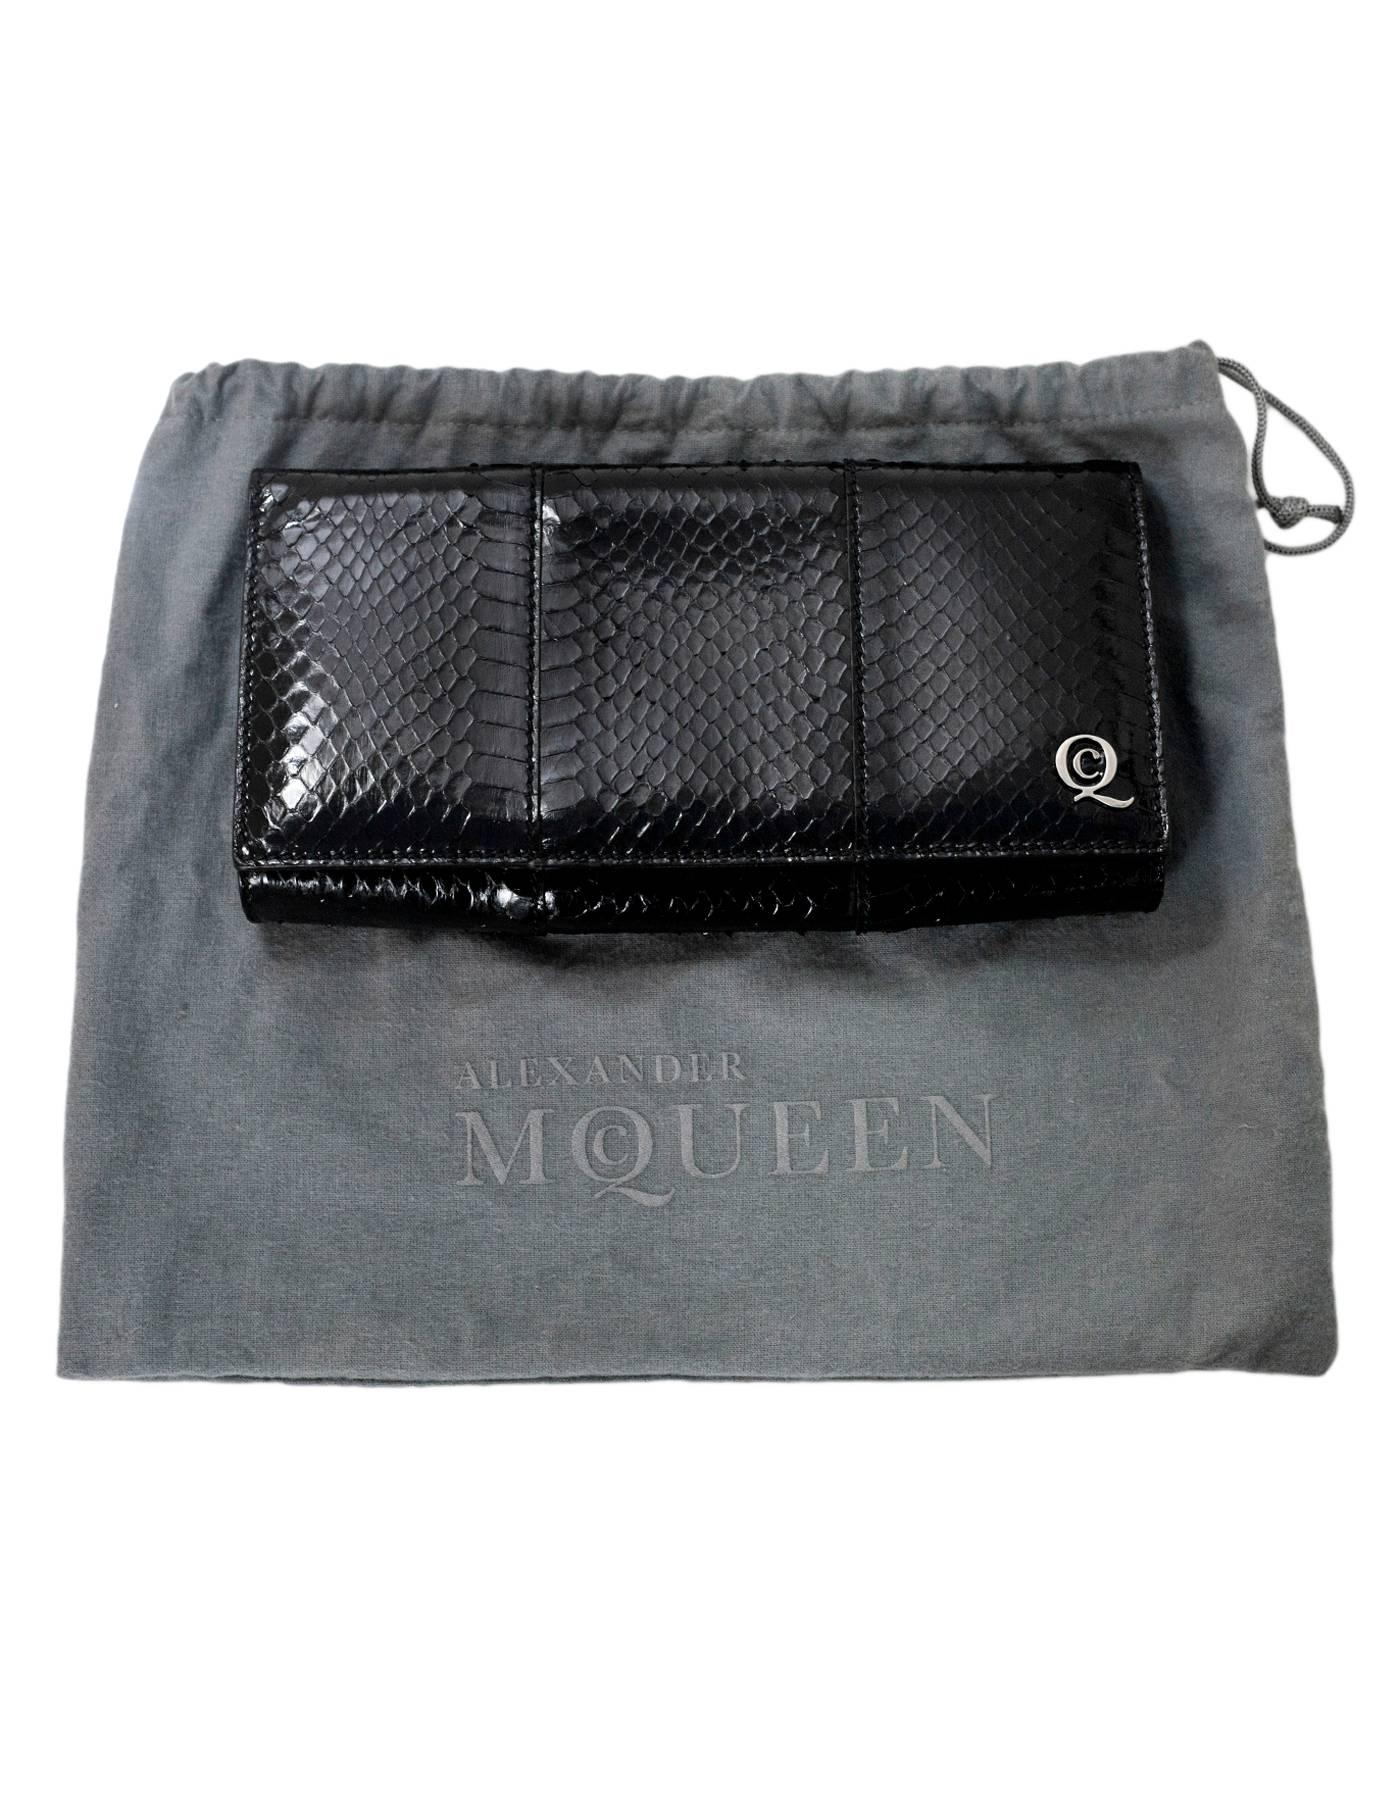 Alexander McQueen Black Python Clutch Bag 4